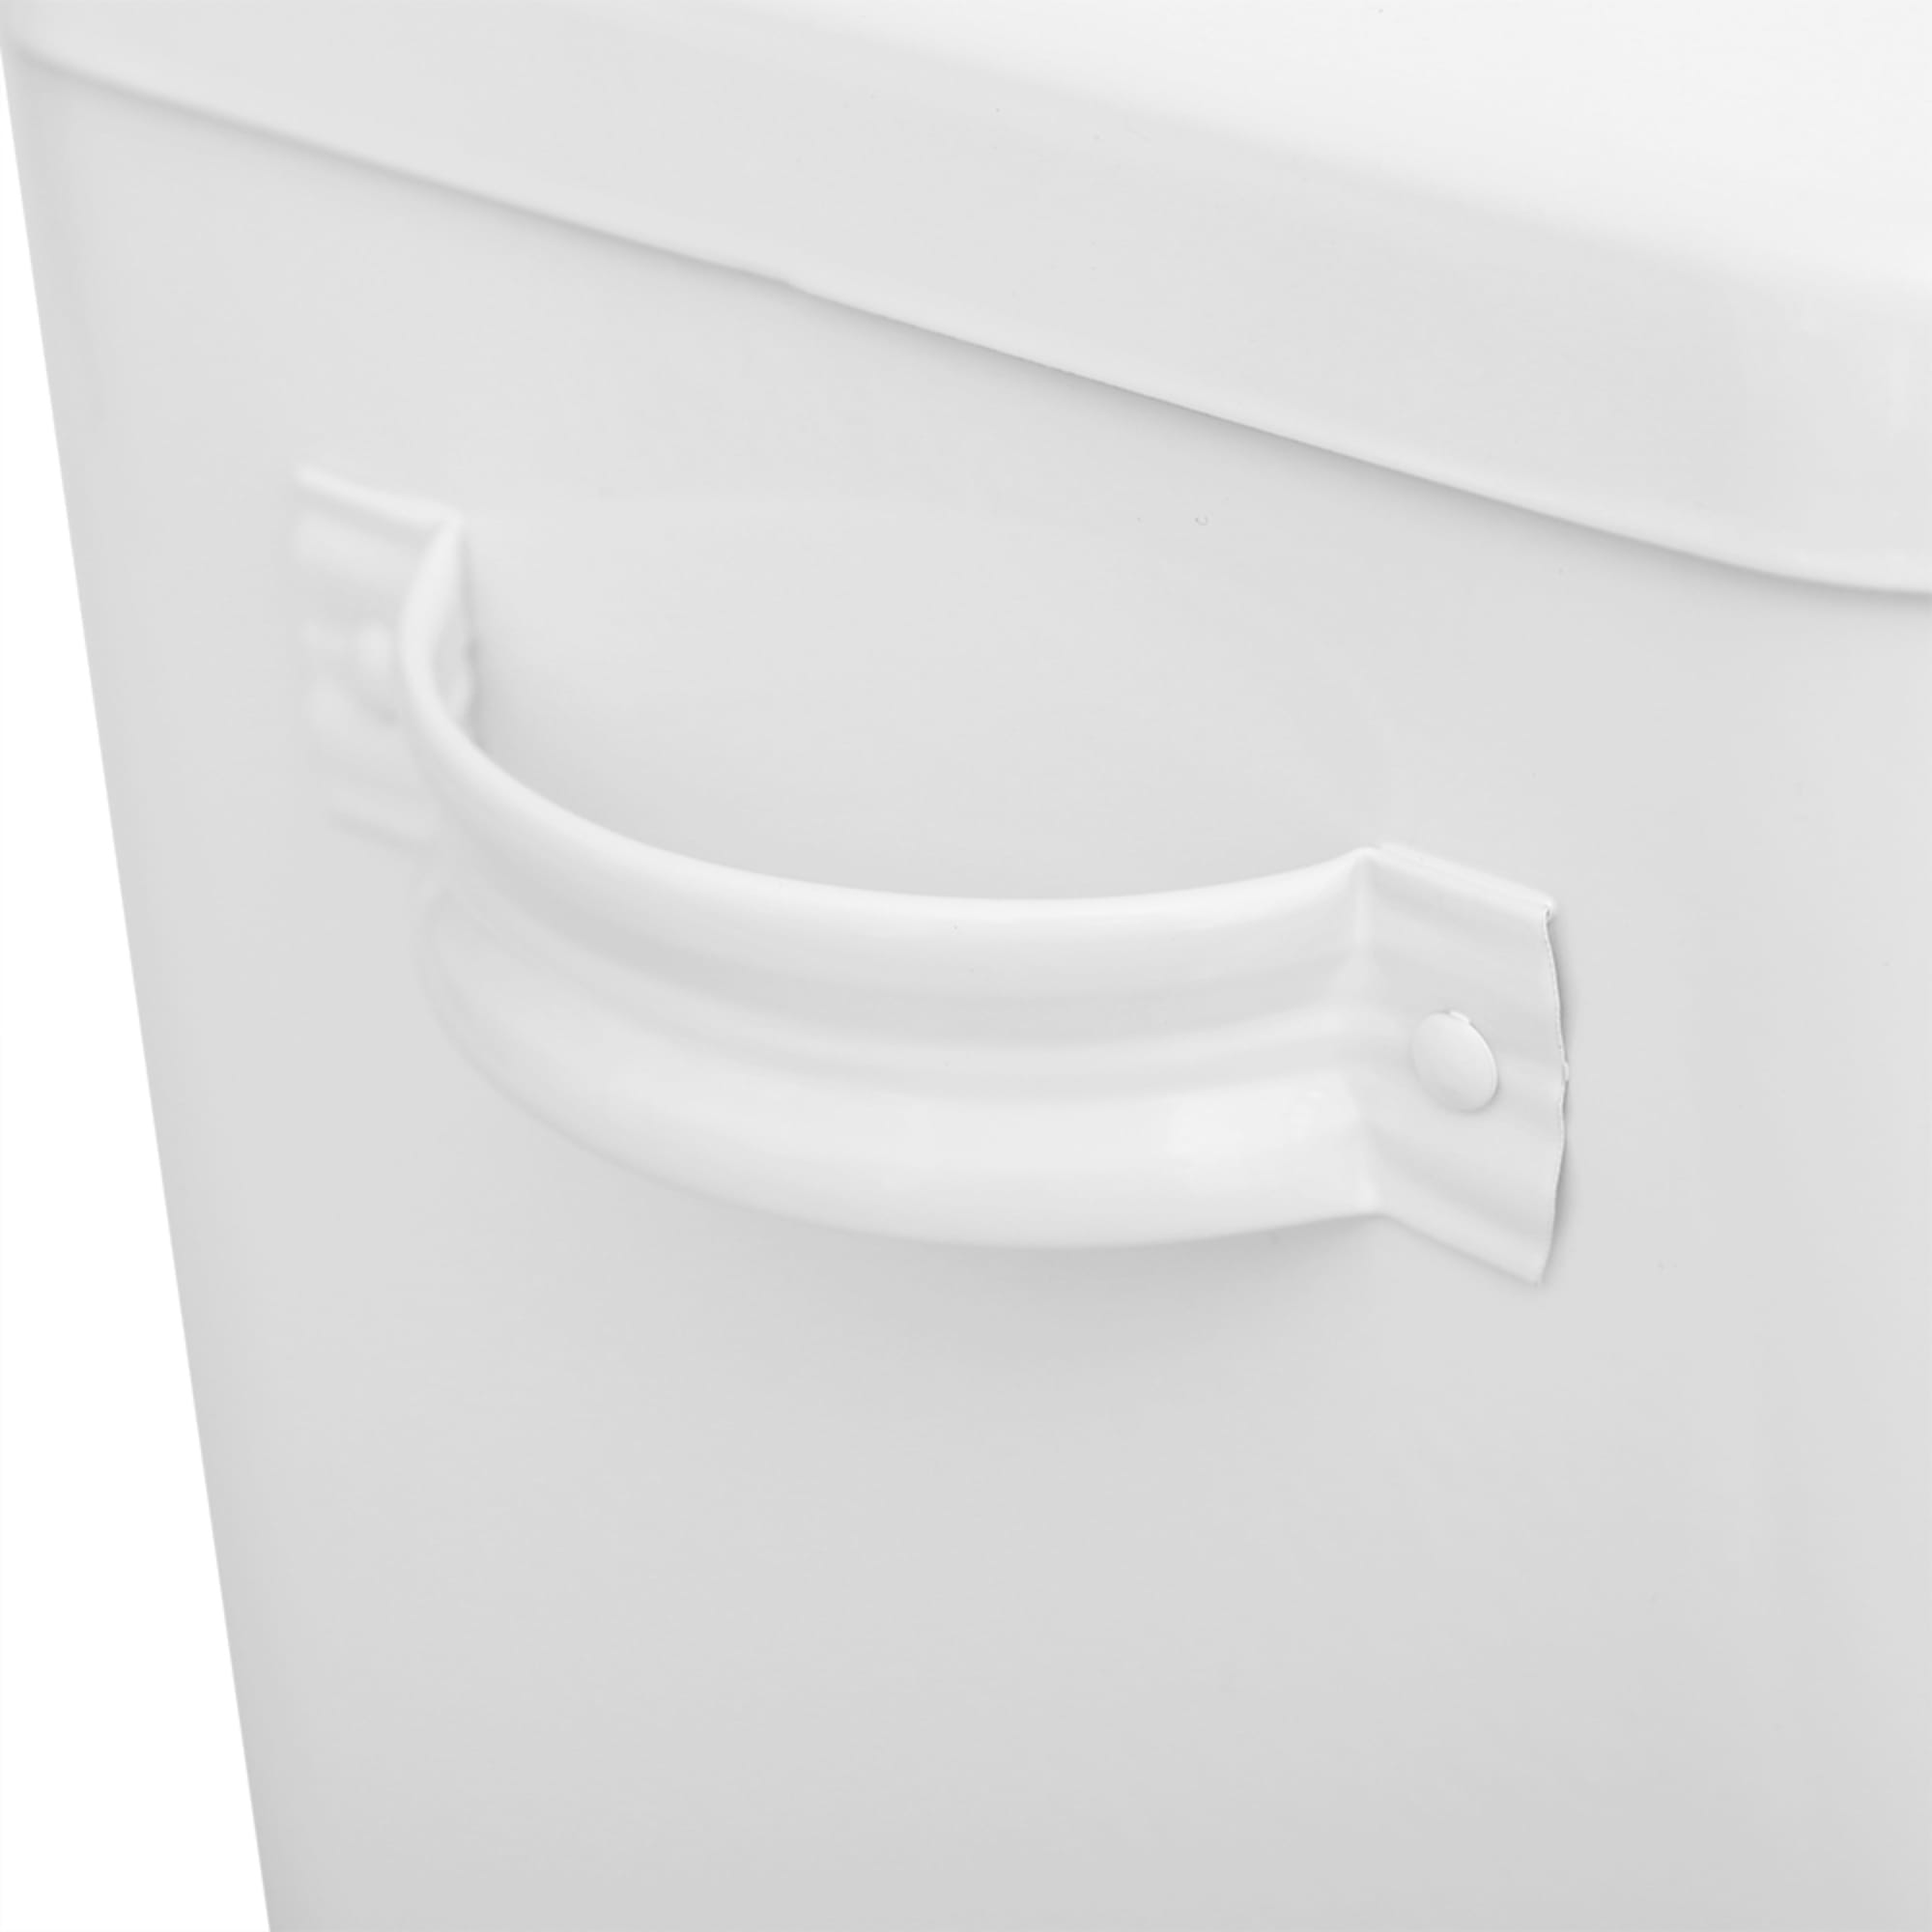 Home Basics Countryside Tin Breadbox, White $30.00 EACH, CASE PACK OF 4